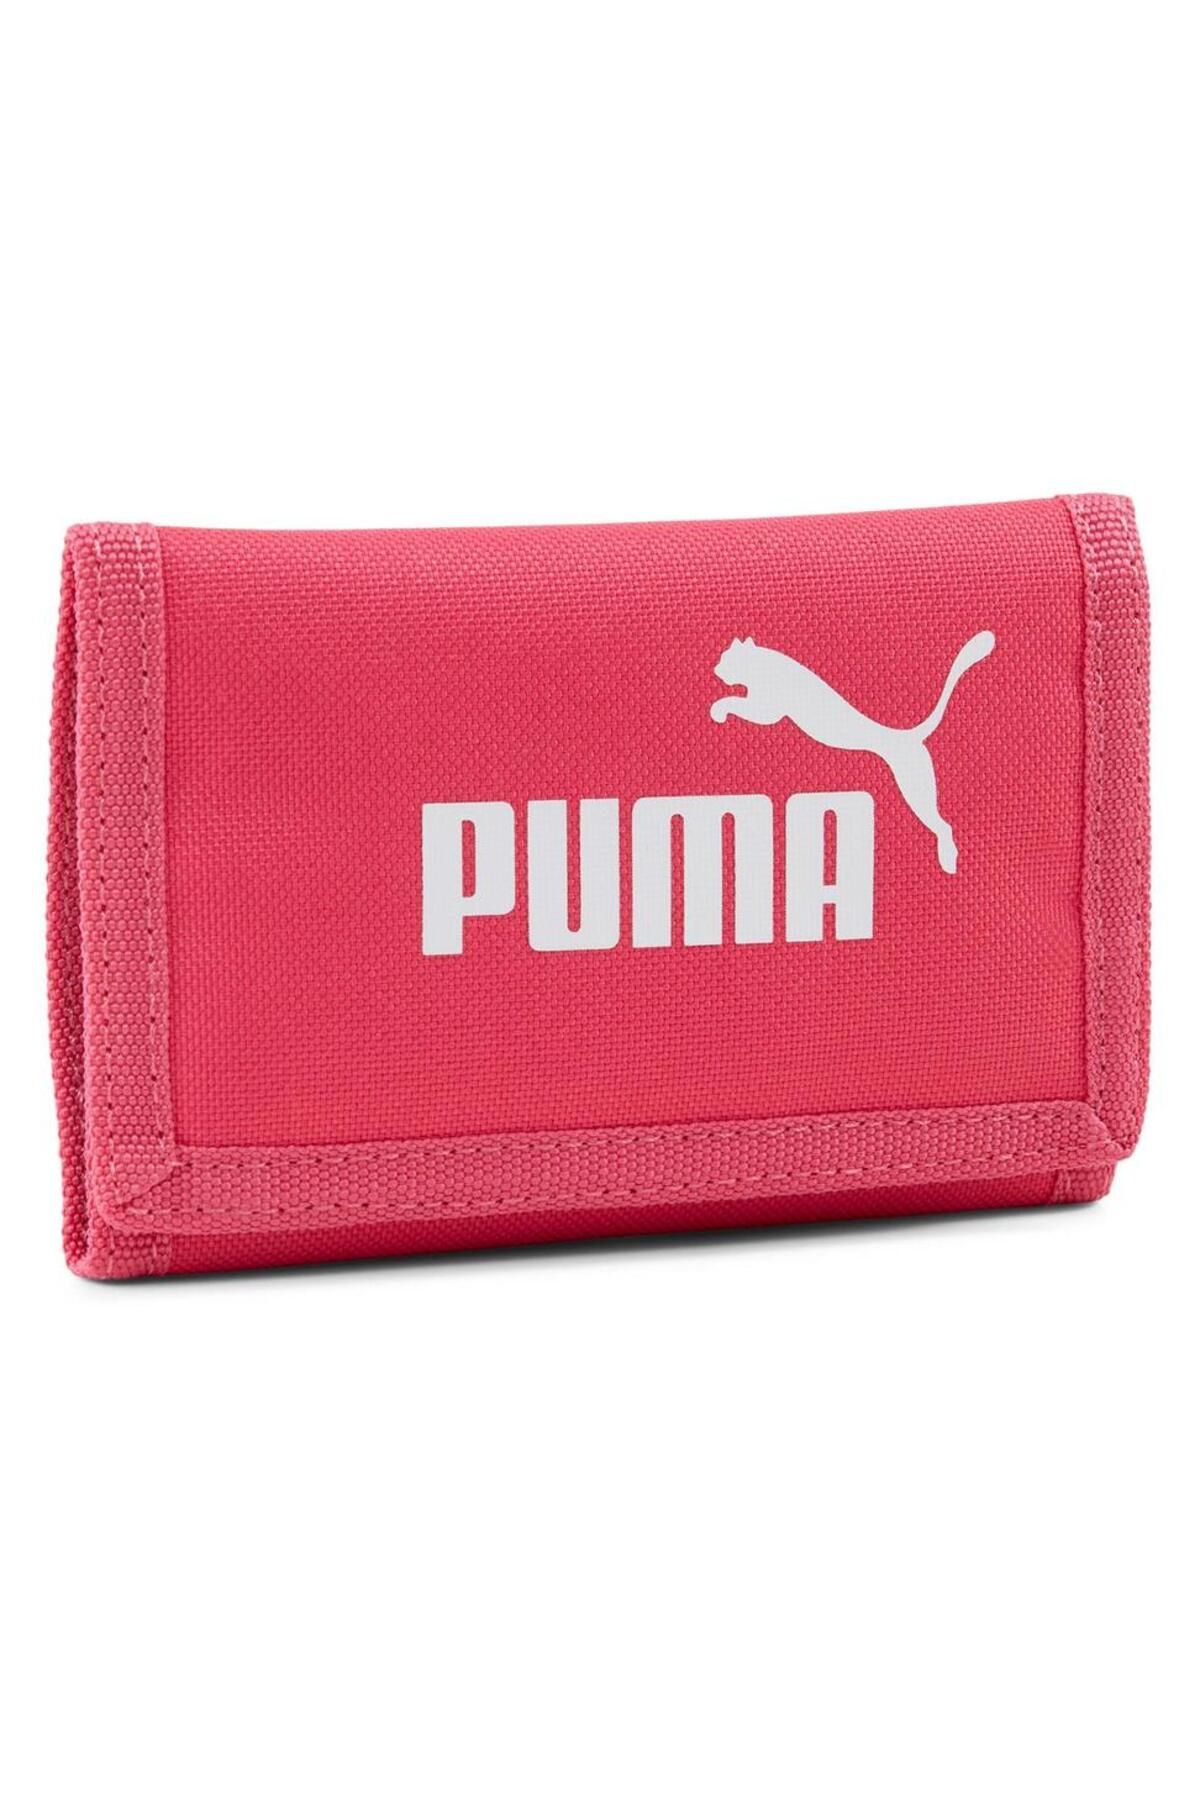 Puma Phase Kadın Pembe Cüzdan (079951-11)